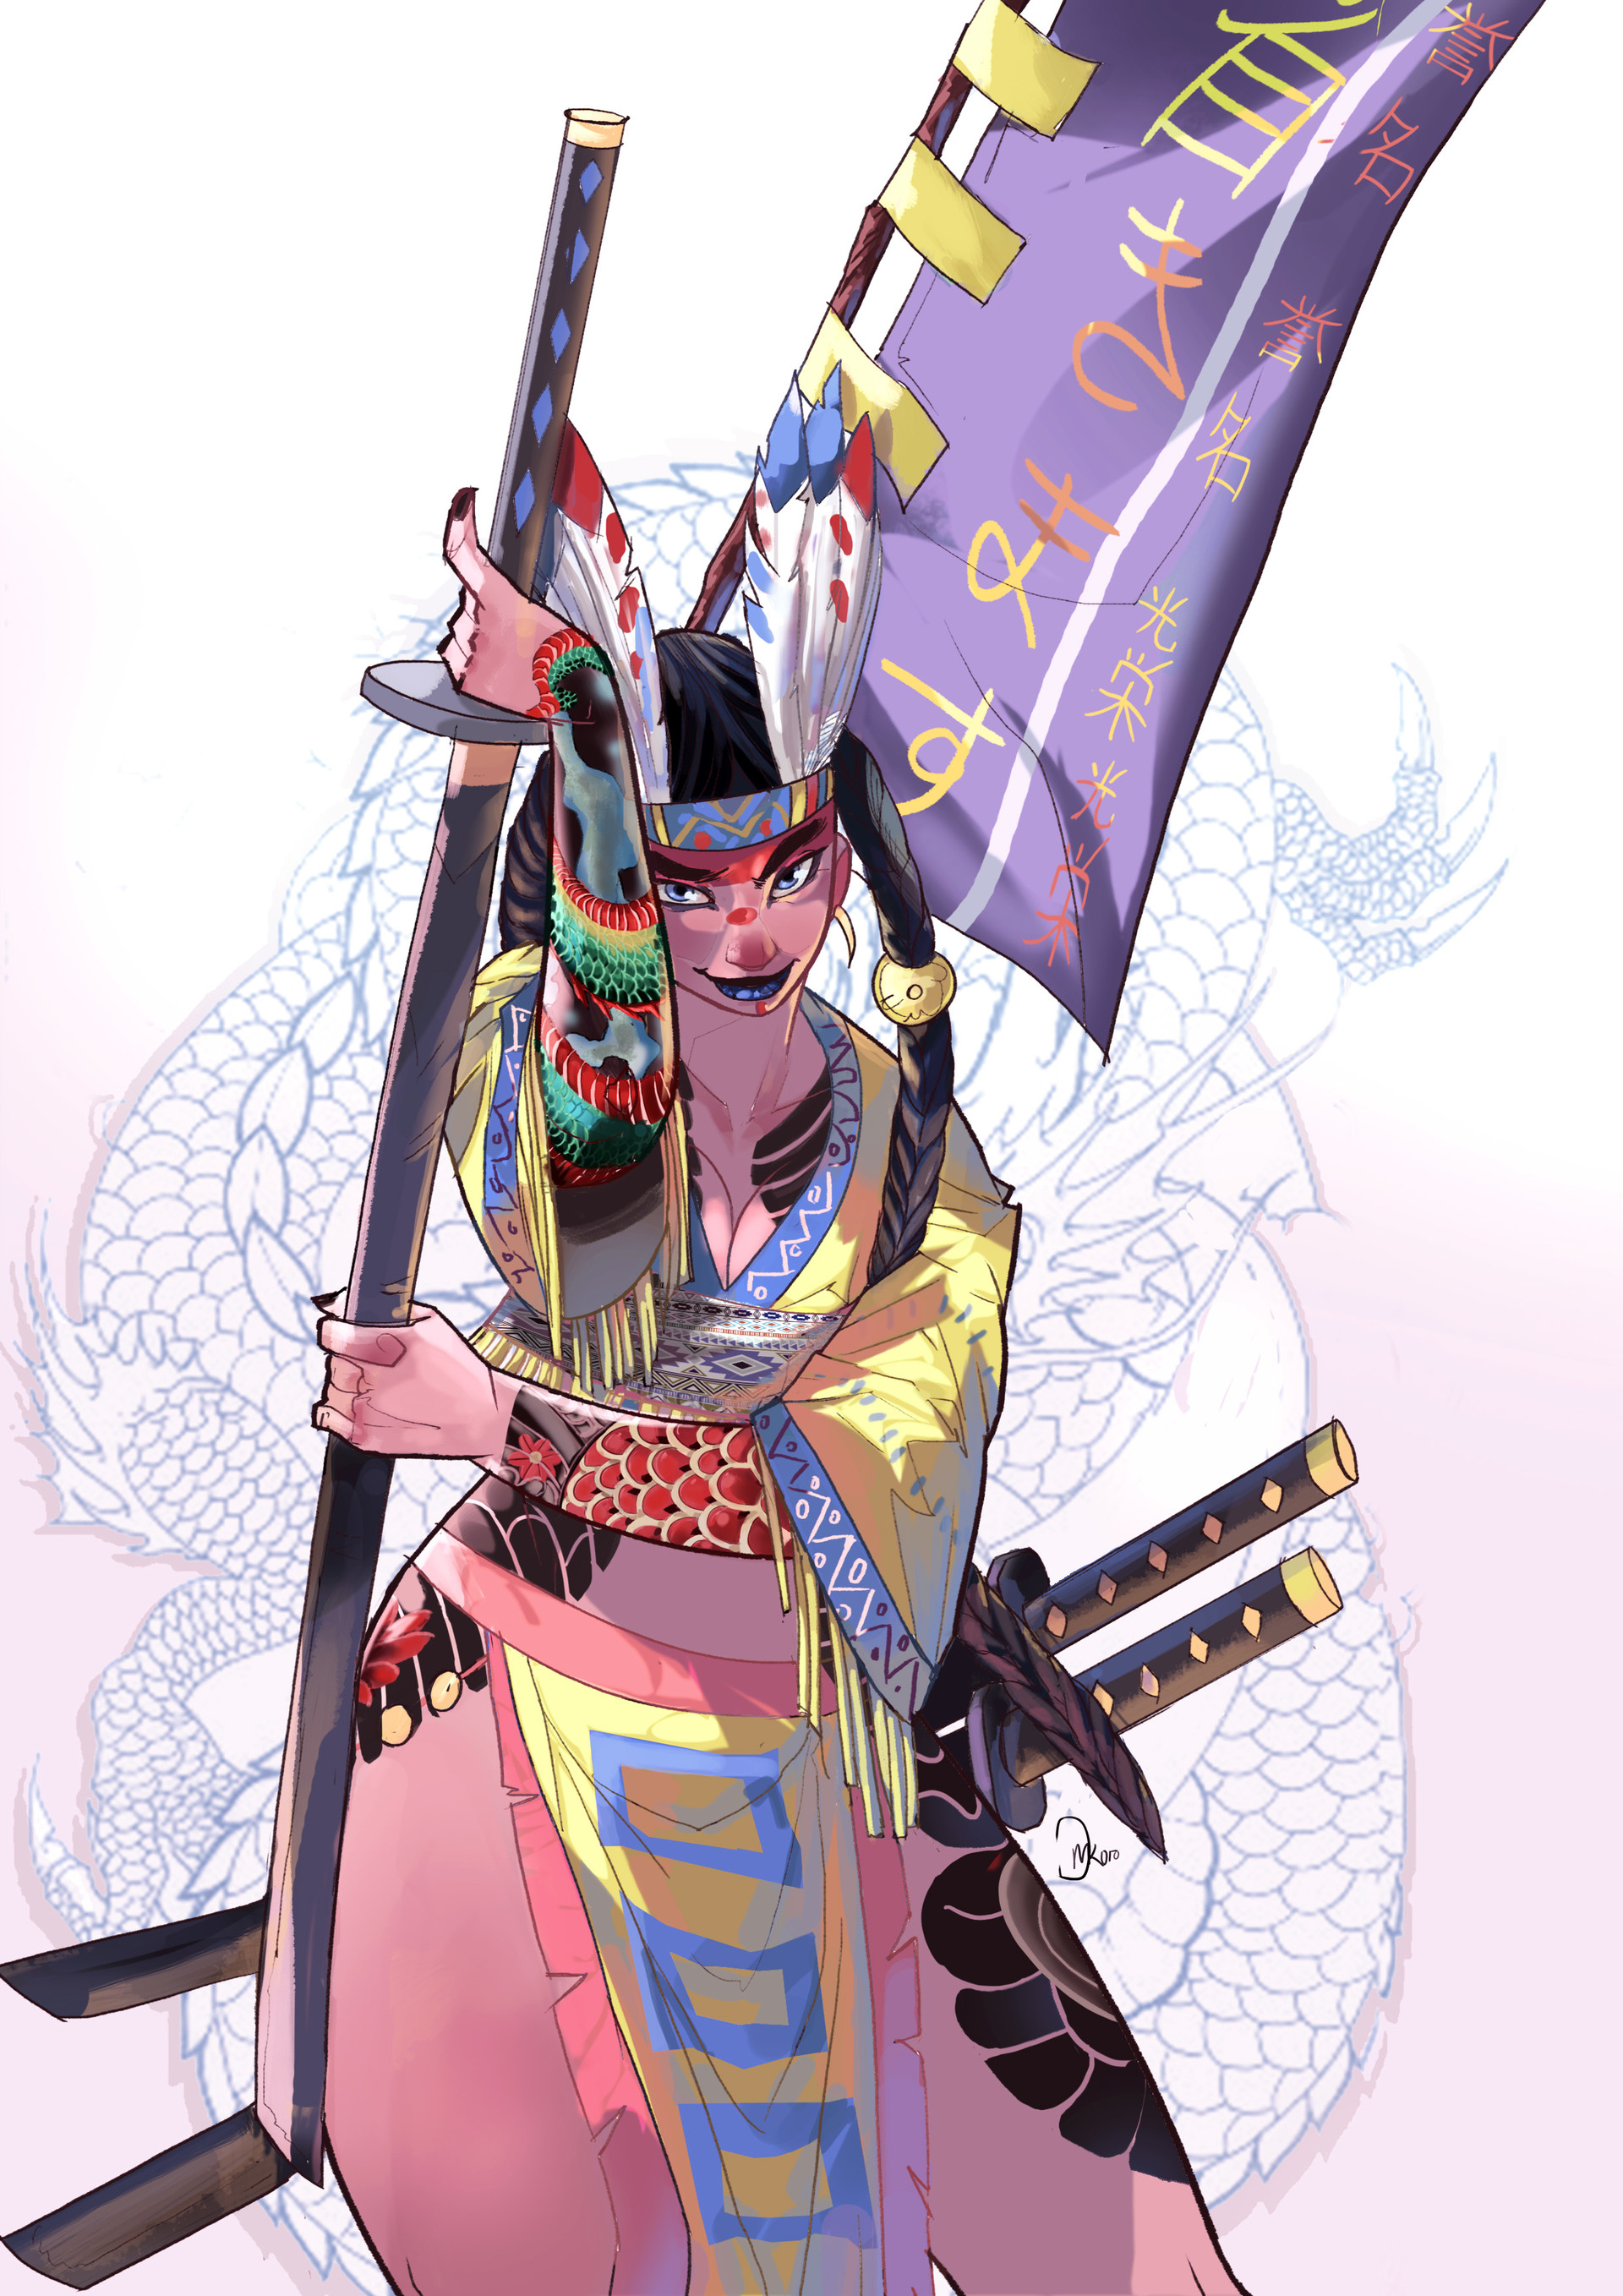 michael-okoroagha-native-samurai2-copy.jpg